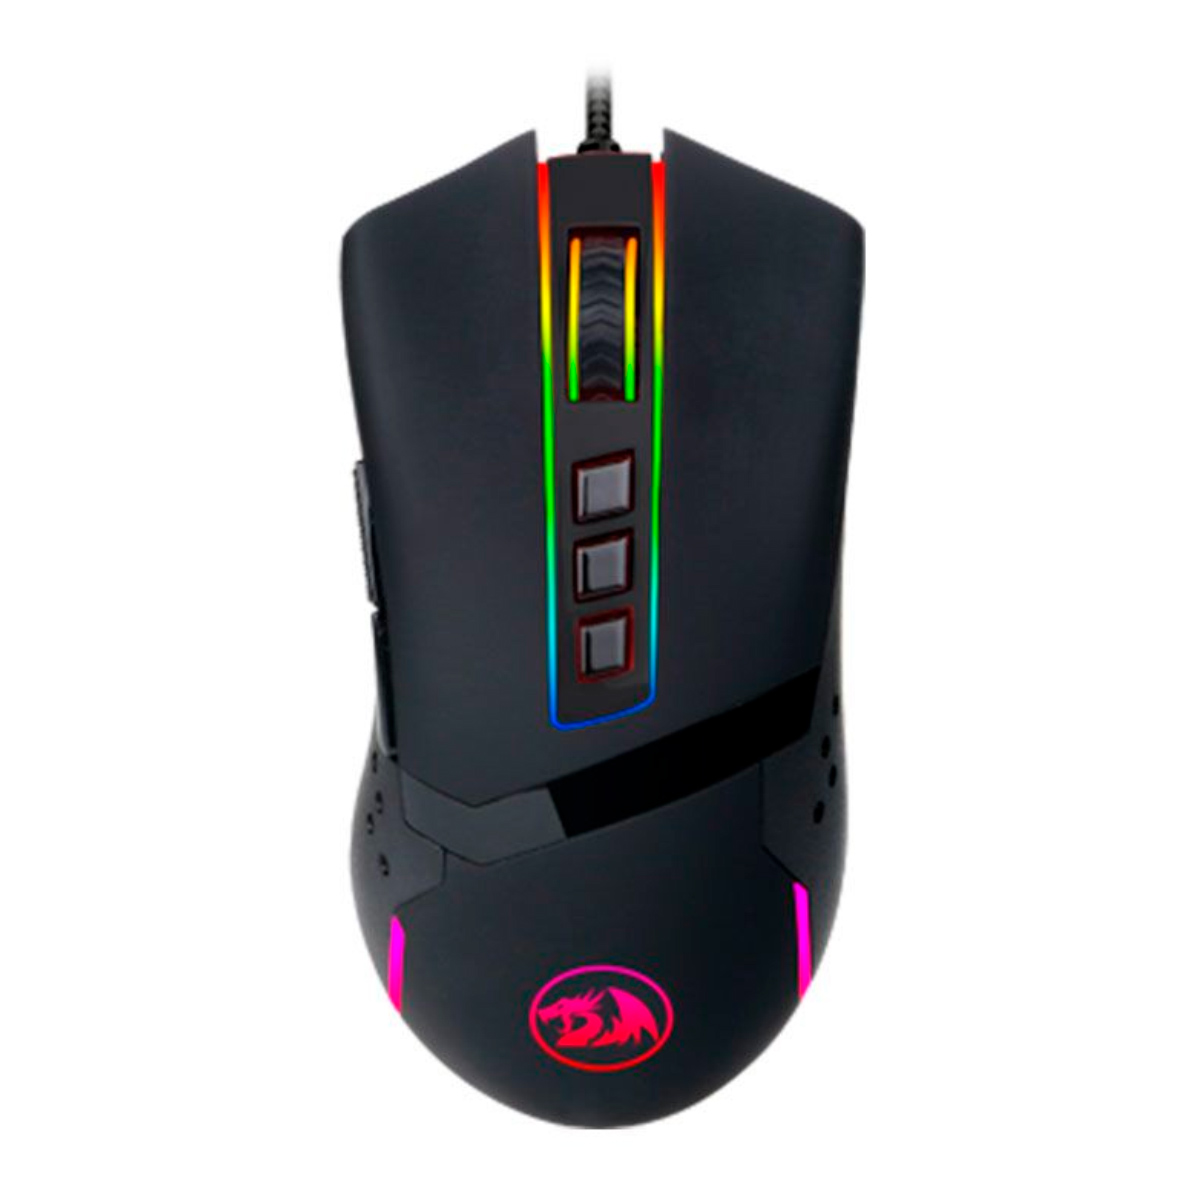 Mouse Gamer Redragon Octopus - 10000dpi - 7 Botões Programáveis - LED RGB - M712-RGB